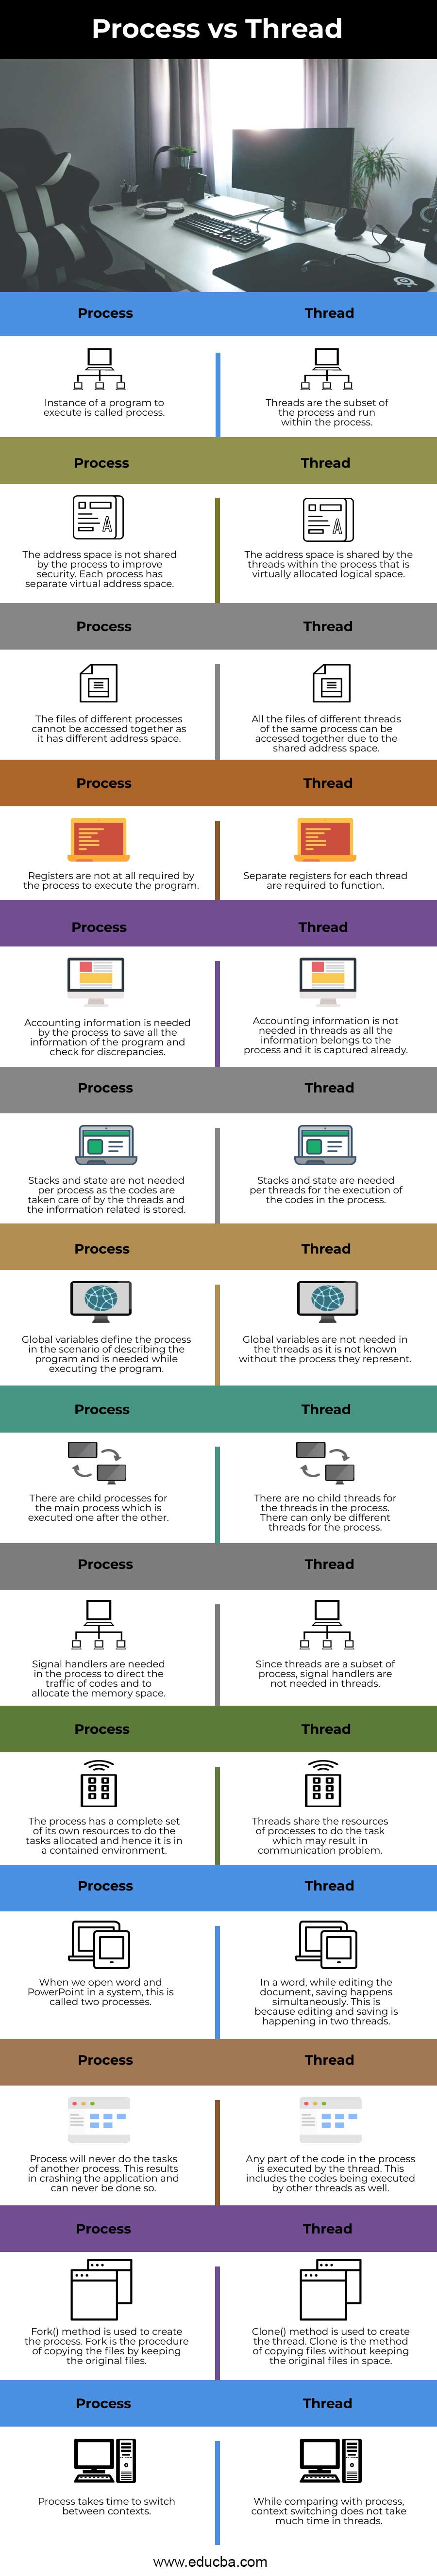 Process-vs-Thread-info